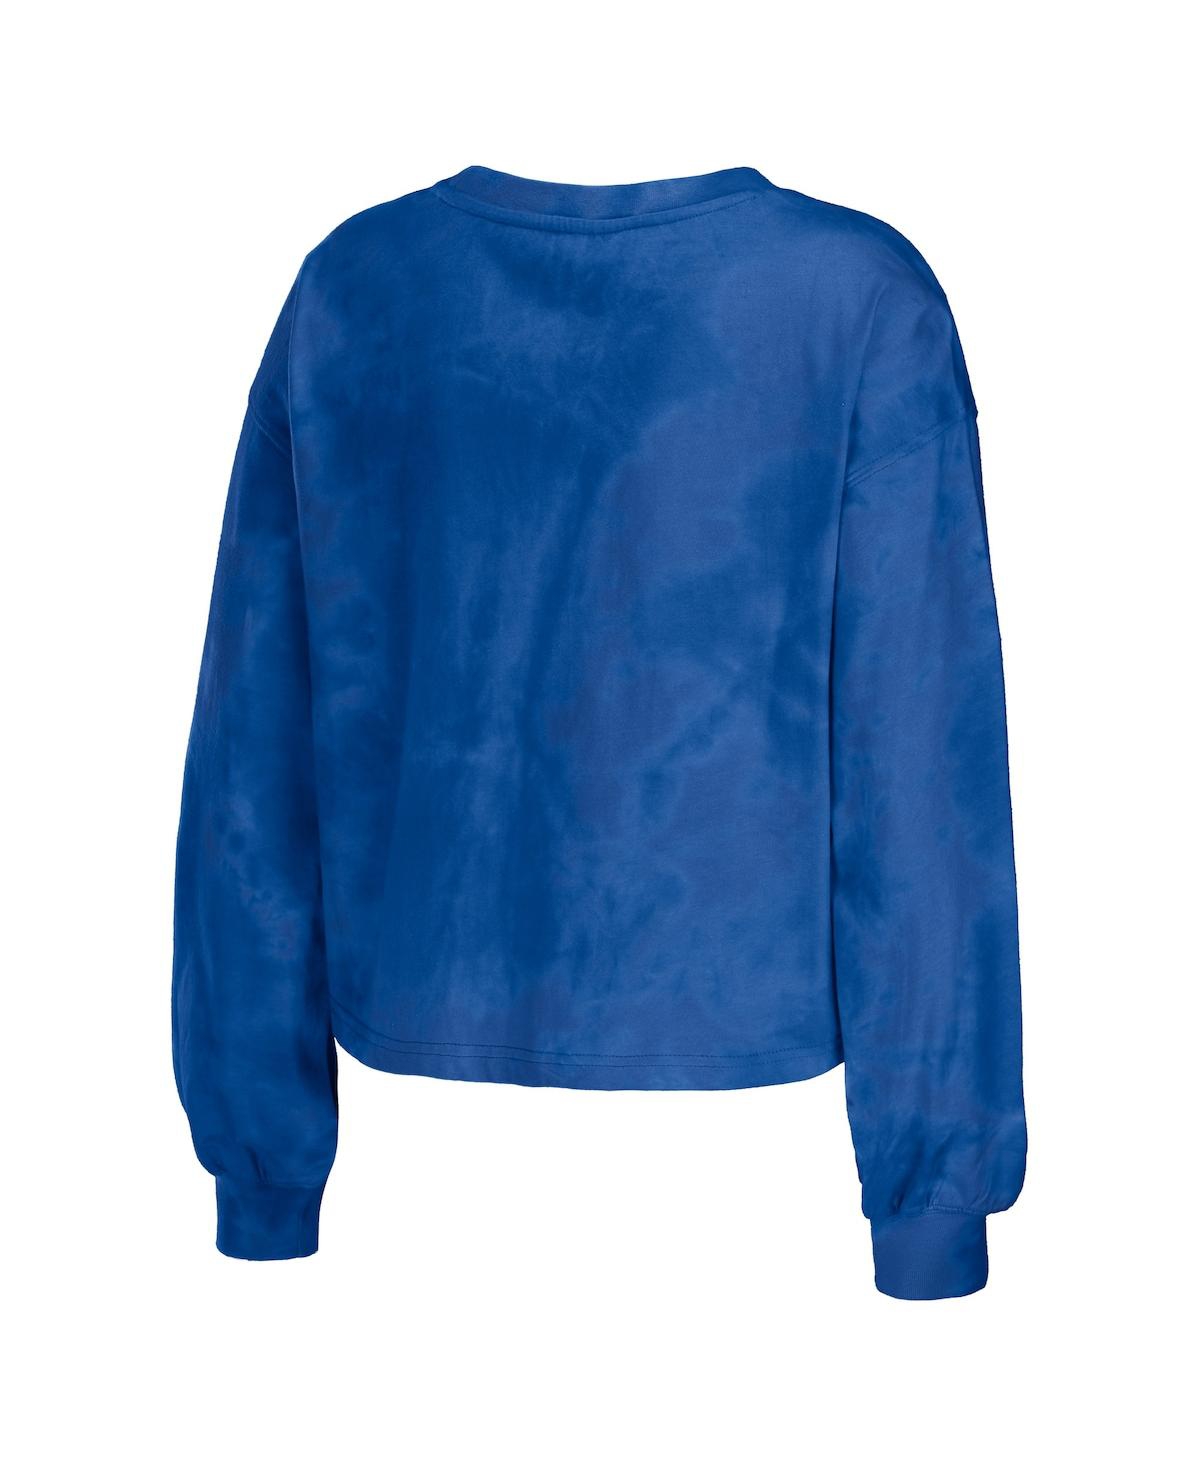 Shop Wear By Erin Andrews Women's  Blue St. Louis Blues Tie-dye Cropped Pullover Sweatshirt And Shorts Lou